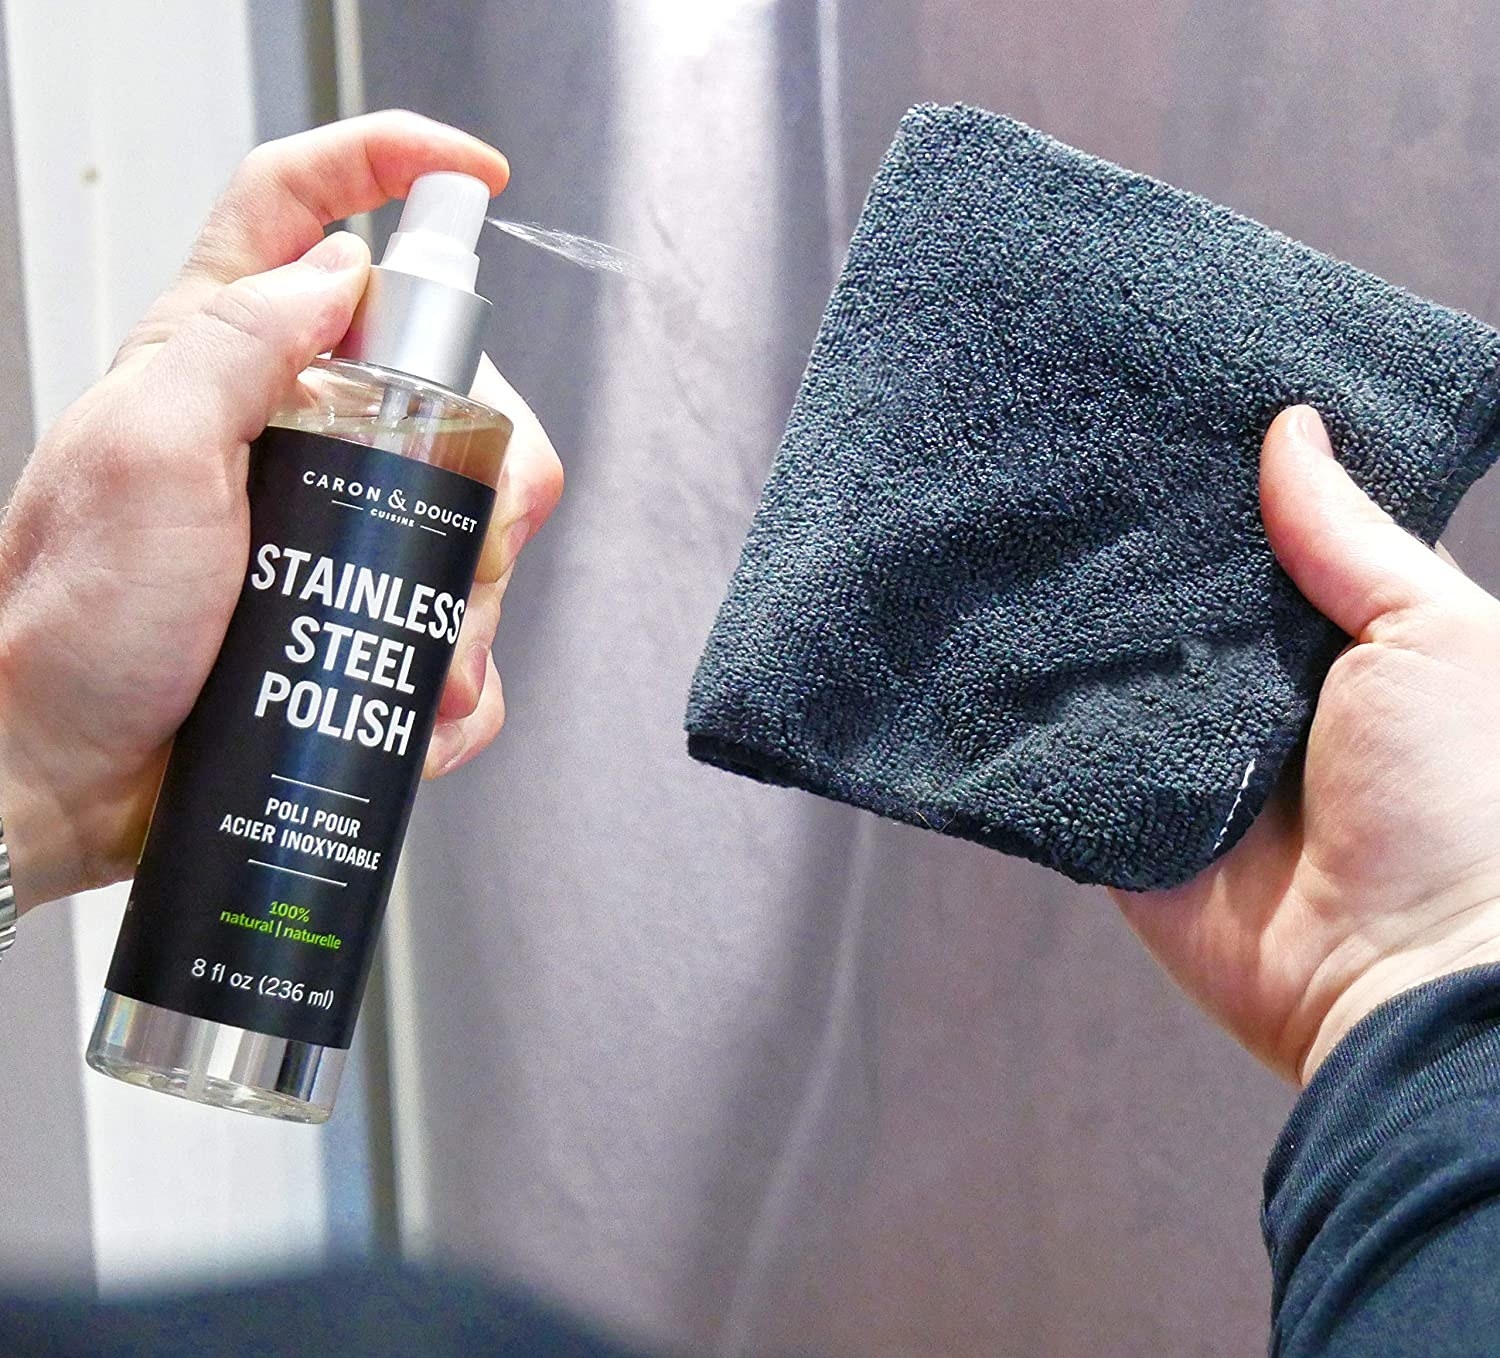 A person spraying the polish onto a rag